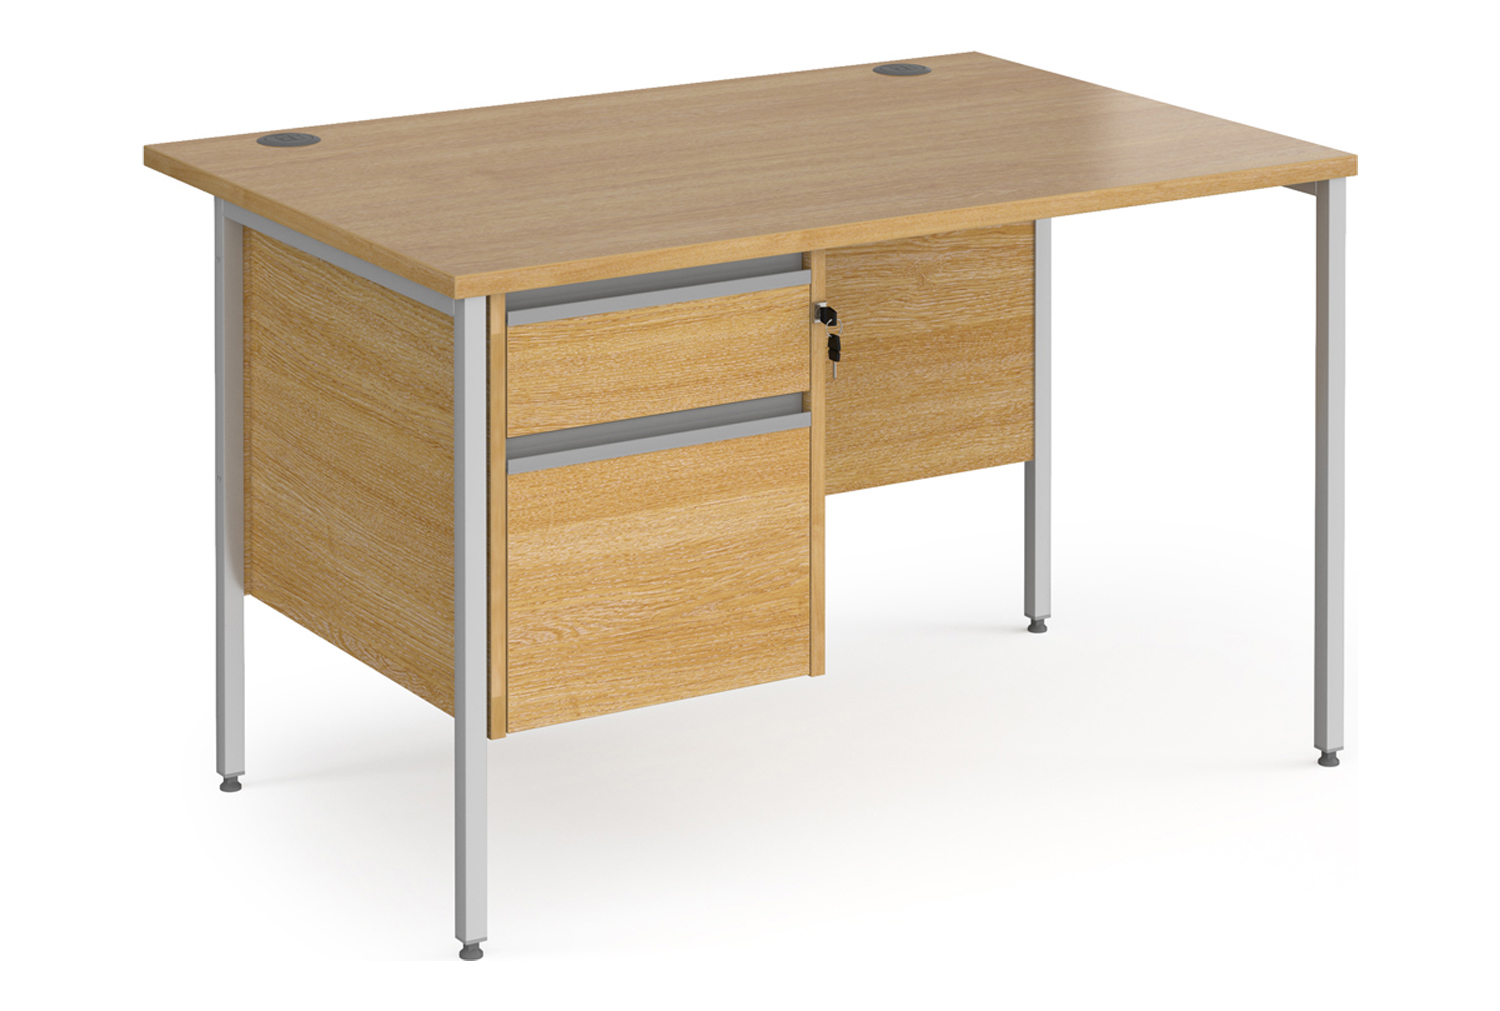 Value Line Classic+ Rectangular H-Leg Office Desk 2 Drawers (Silver Leg), 120wx80dx73h (cm), Oak, Express Delivery